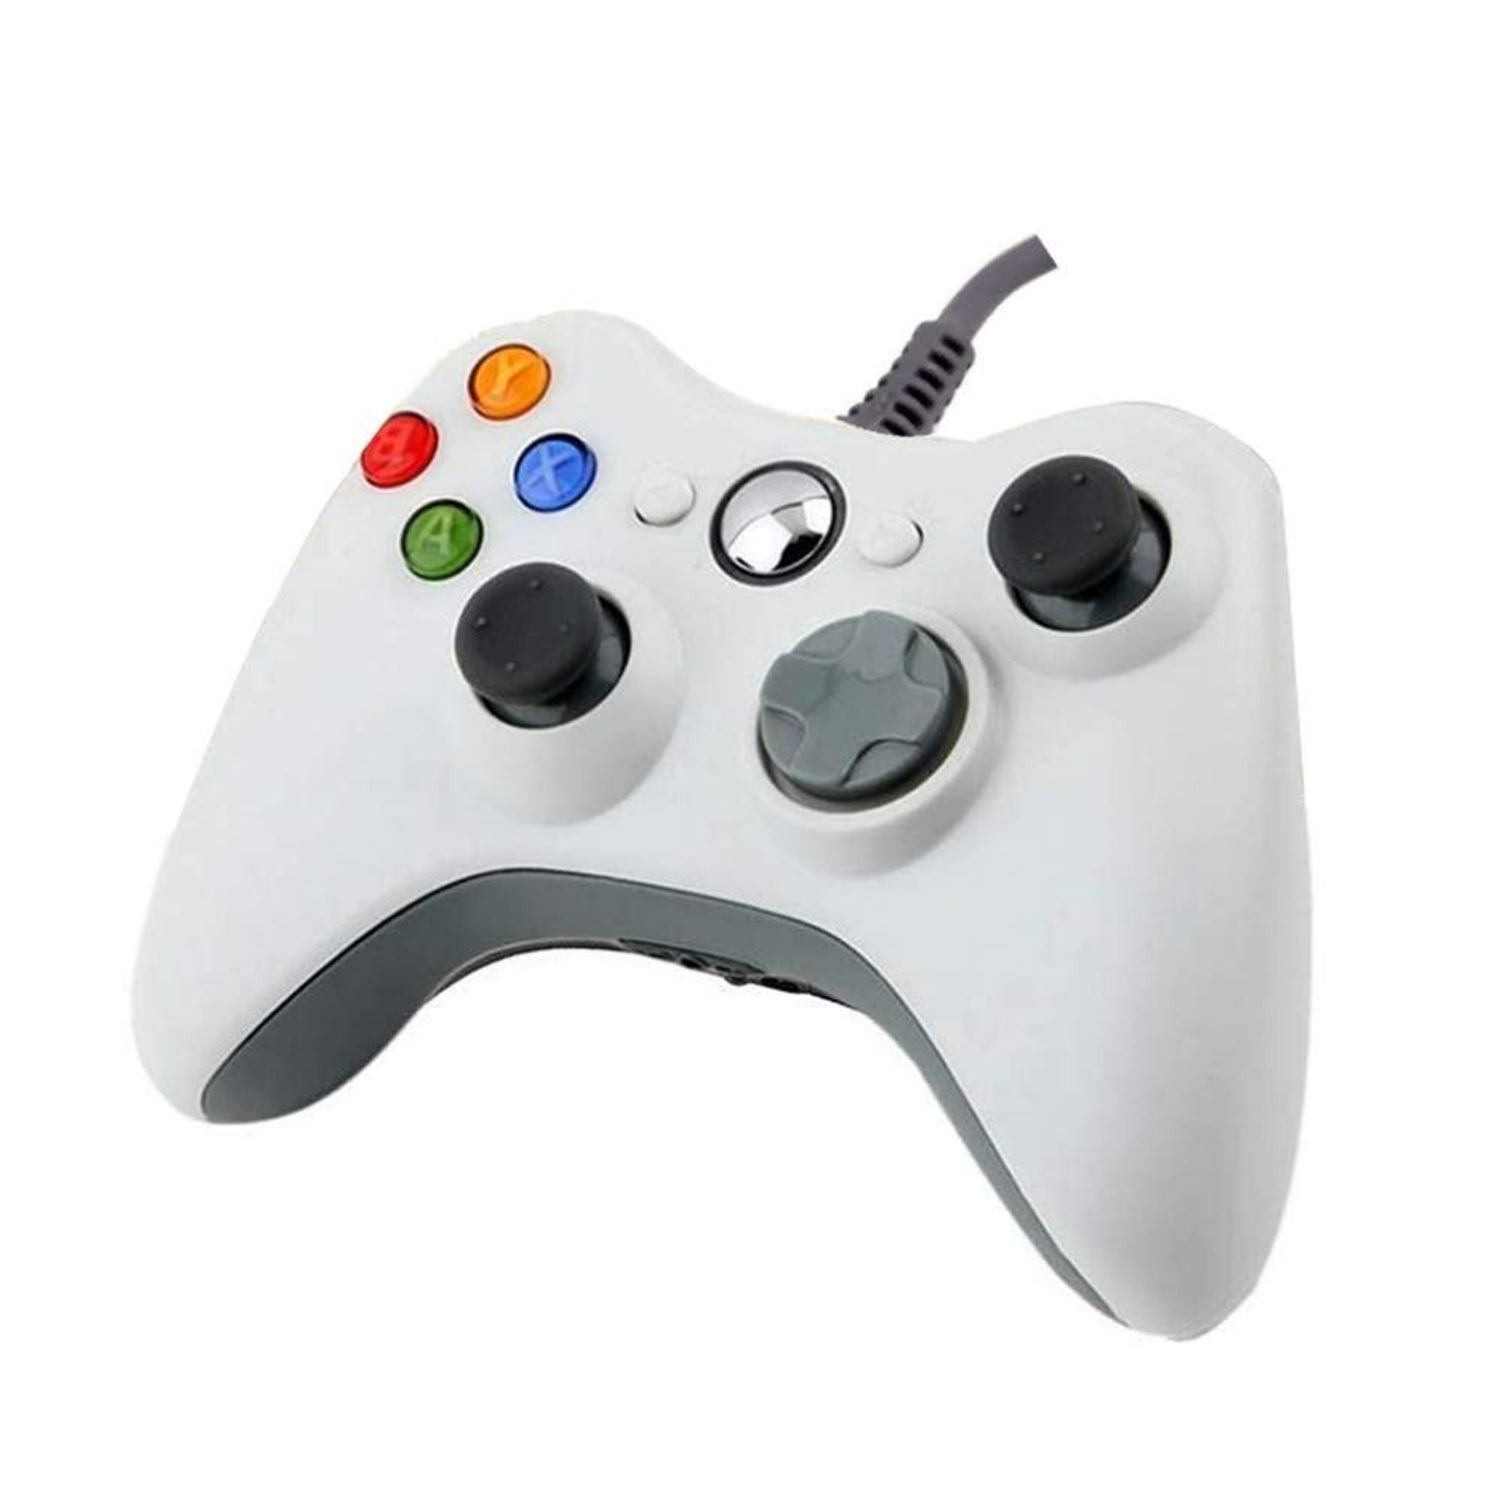 Mando con Cable Usb para Xbox 360 Pc Windows Joystick NJX301 Negro I  Oechsle - Oechsle